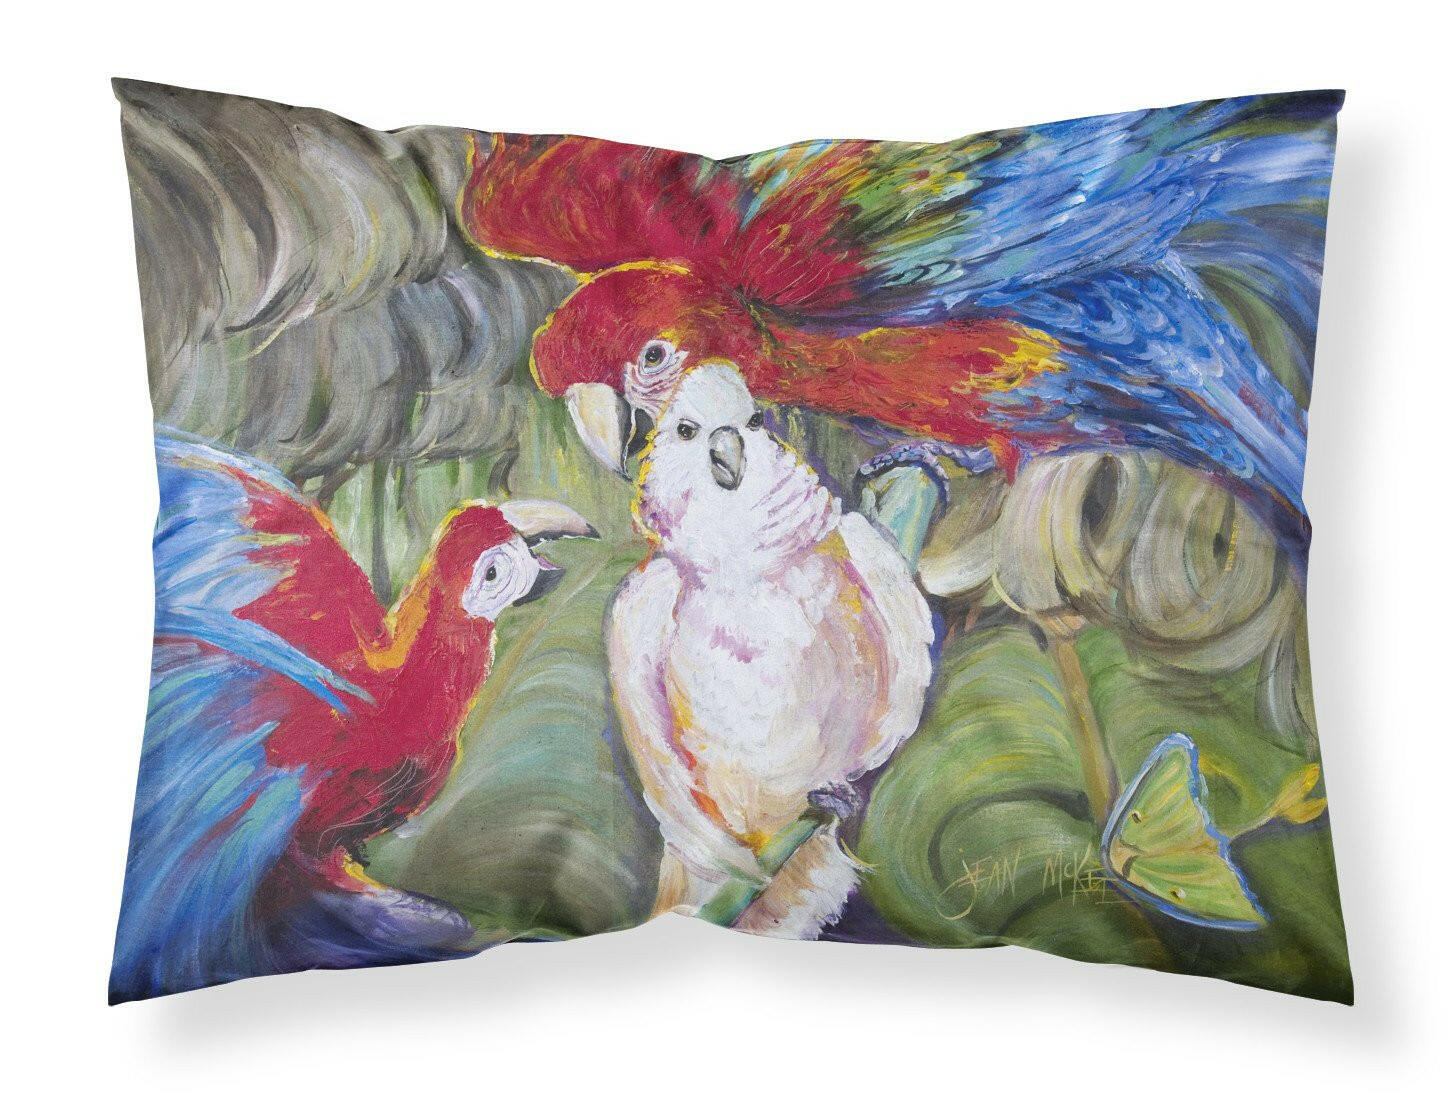 Menage-a-trois Parrots Fabric Standard Pillowcase JMK1018PILLOWCASE by Caroline's Treasures